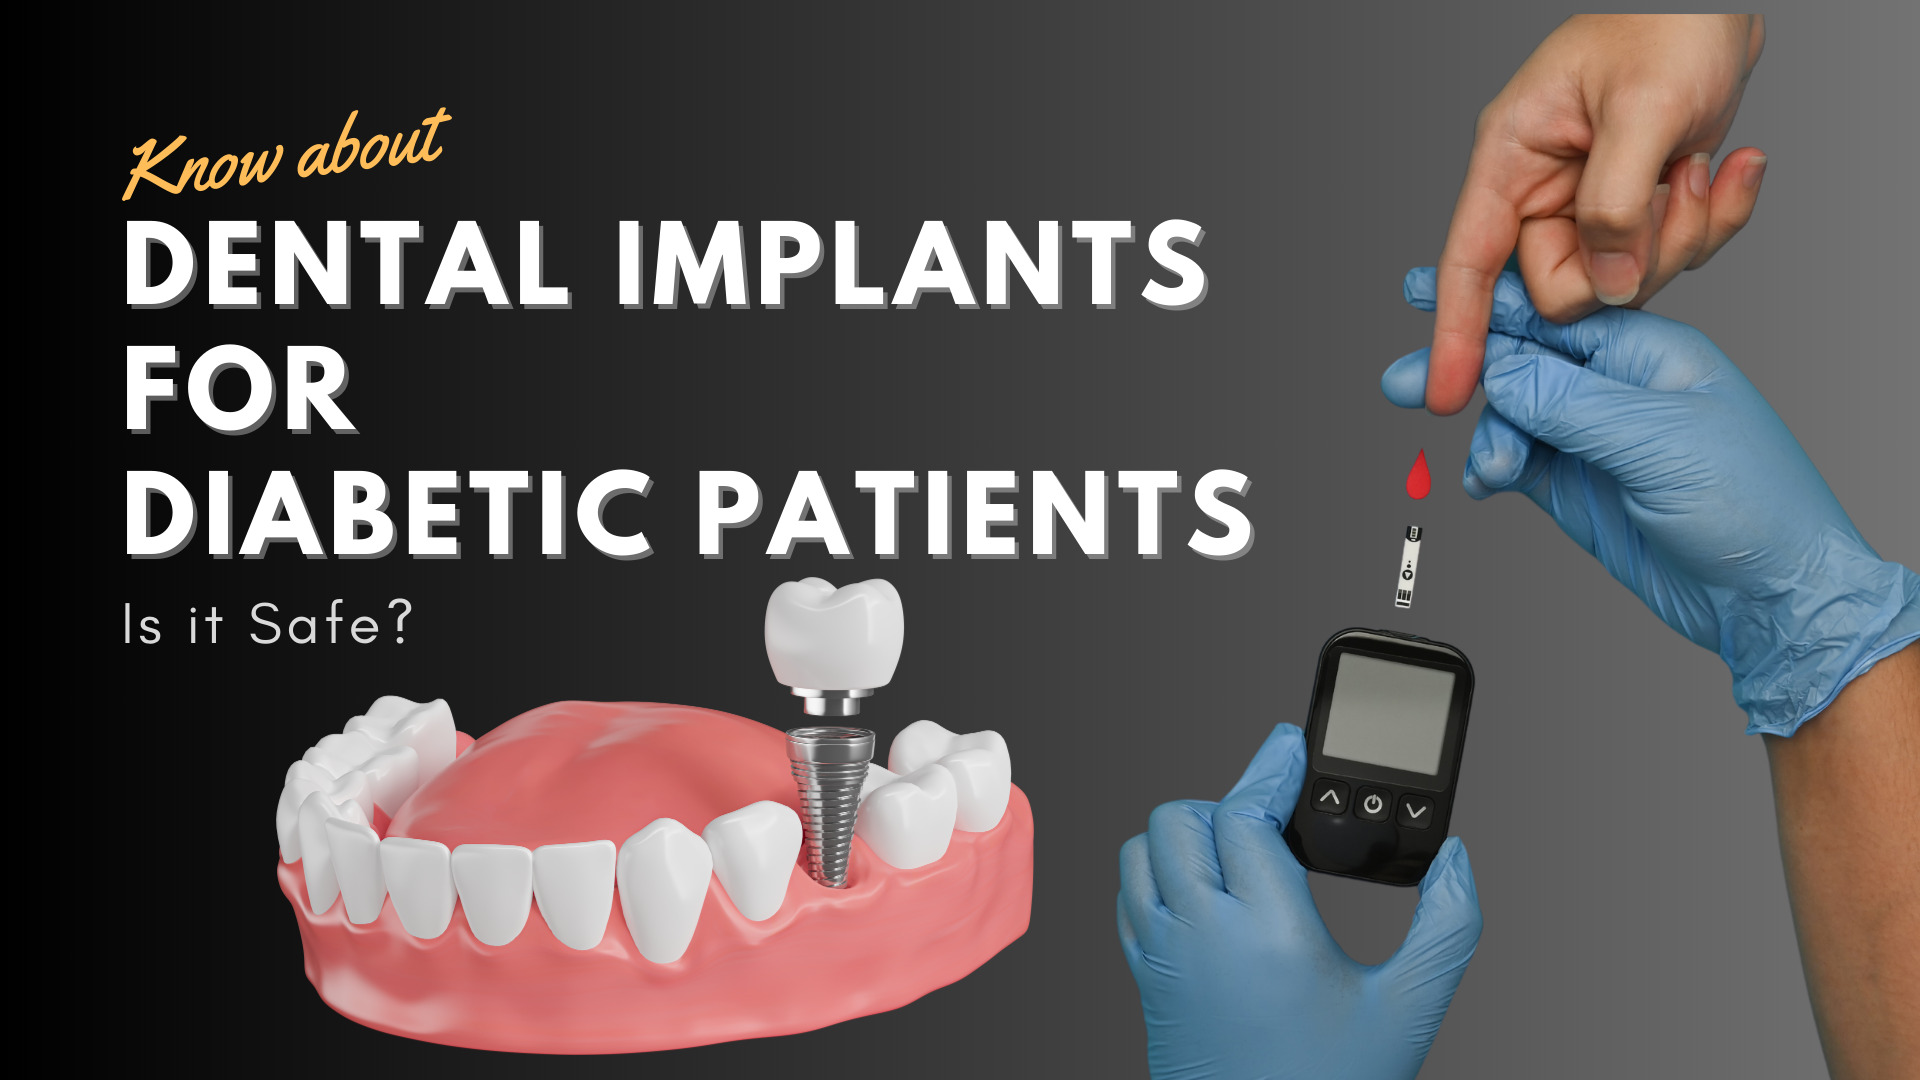 Is dental implant safe for diabetic patients